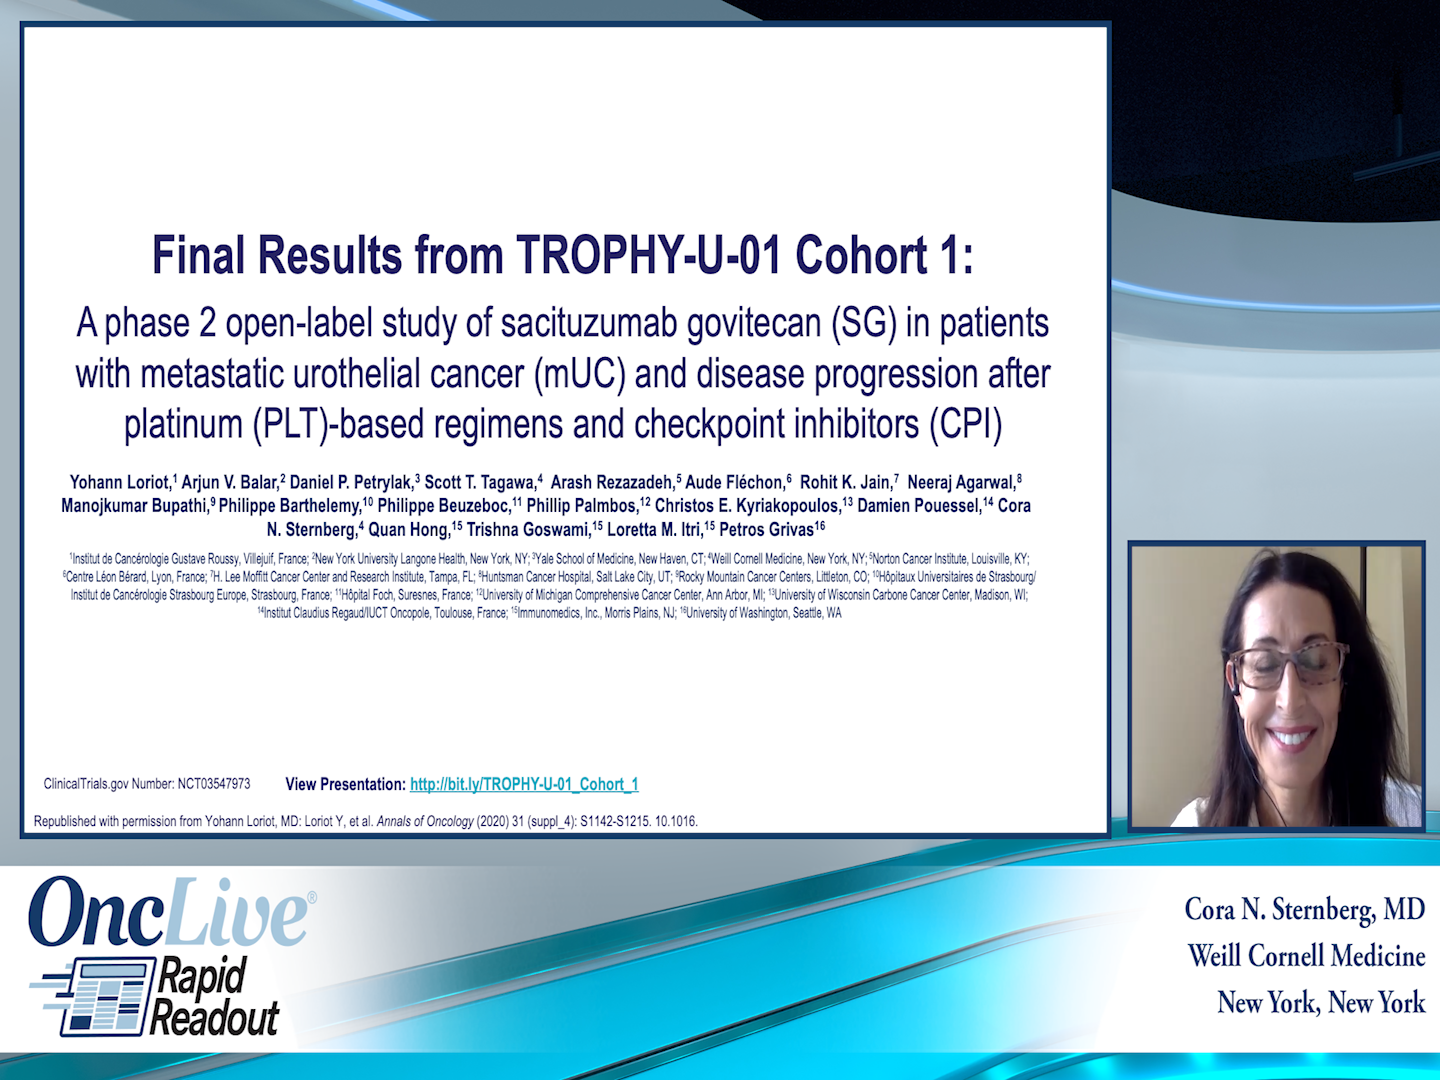 Rapid Readouts: TROPHY-U-01 Cohort 1 Final Results